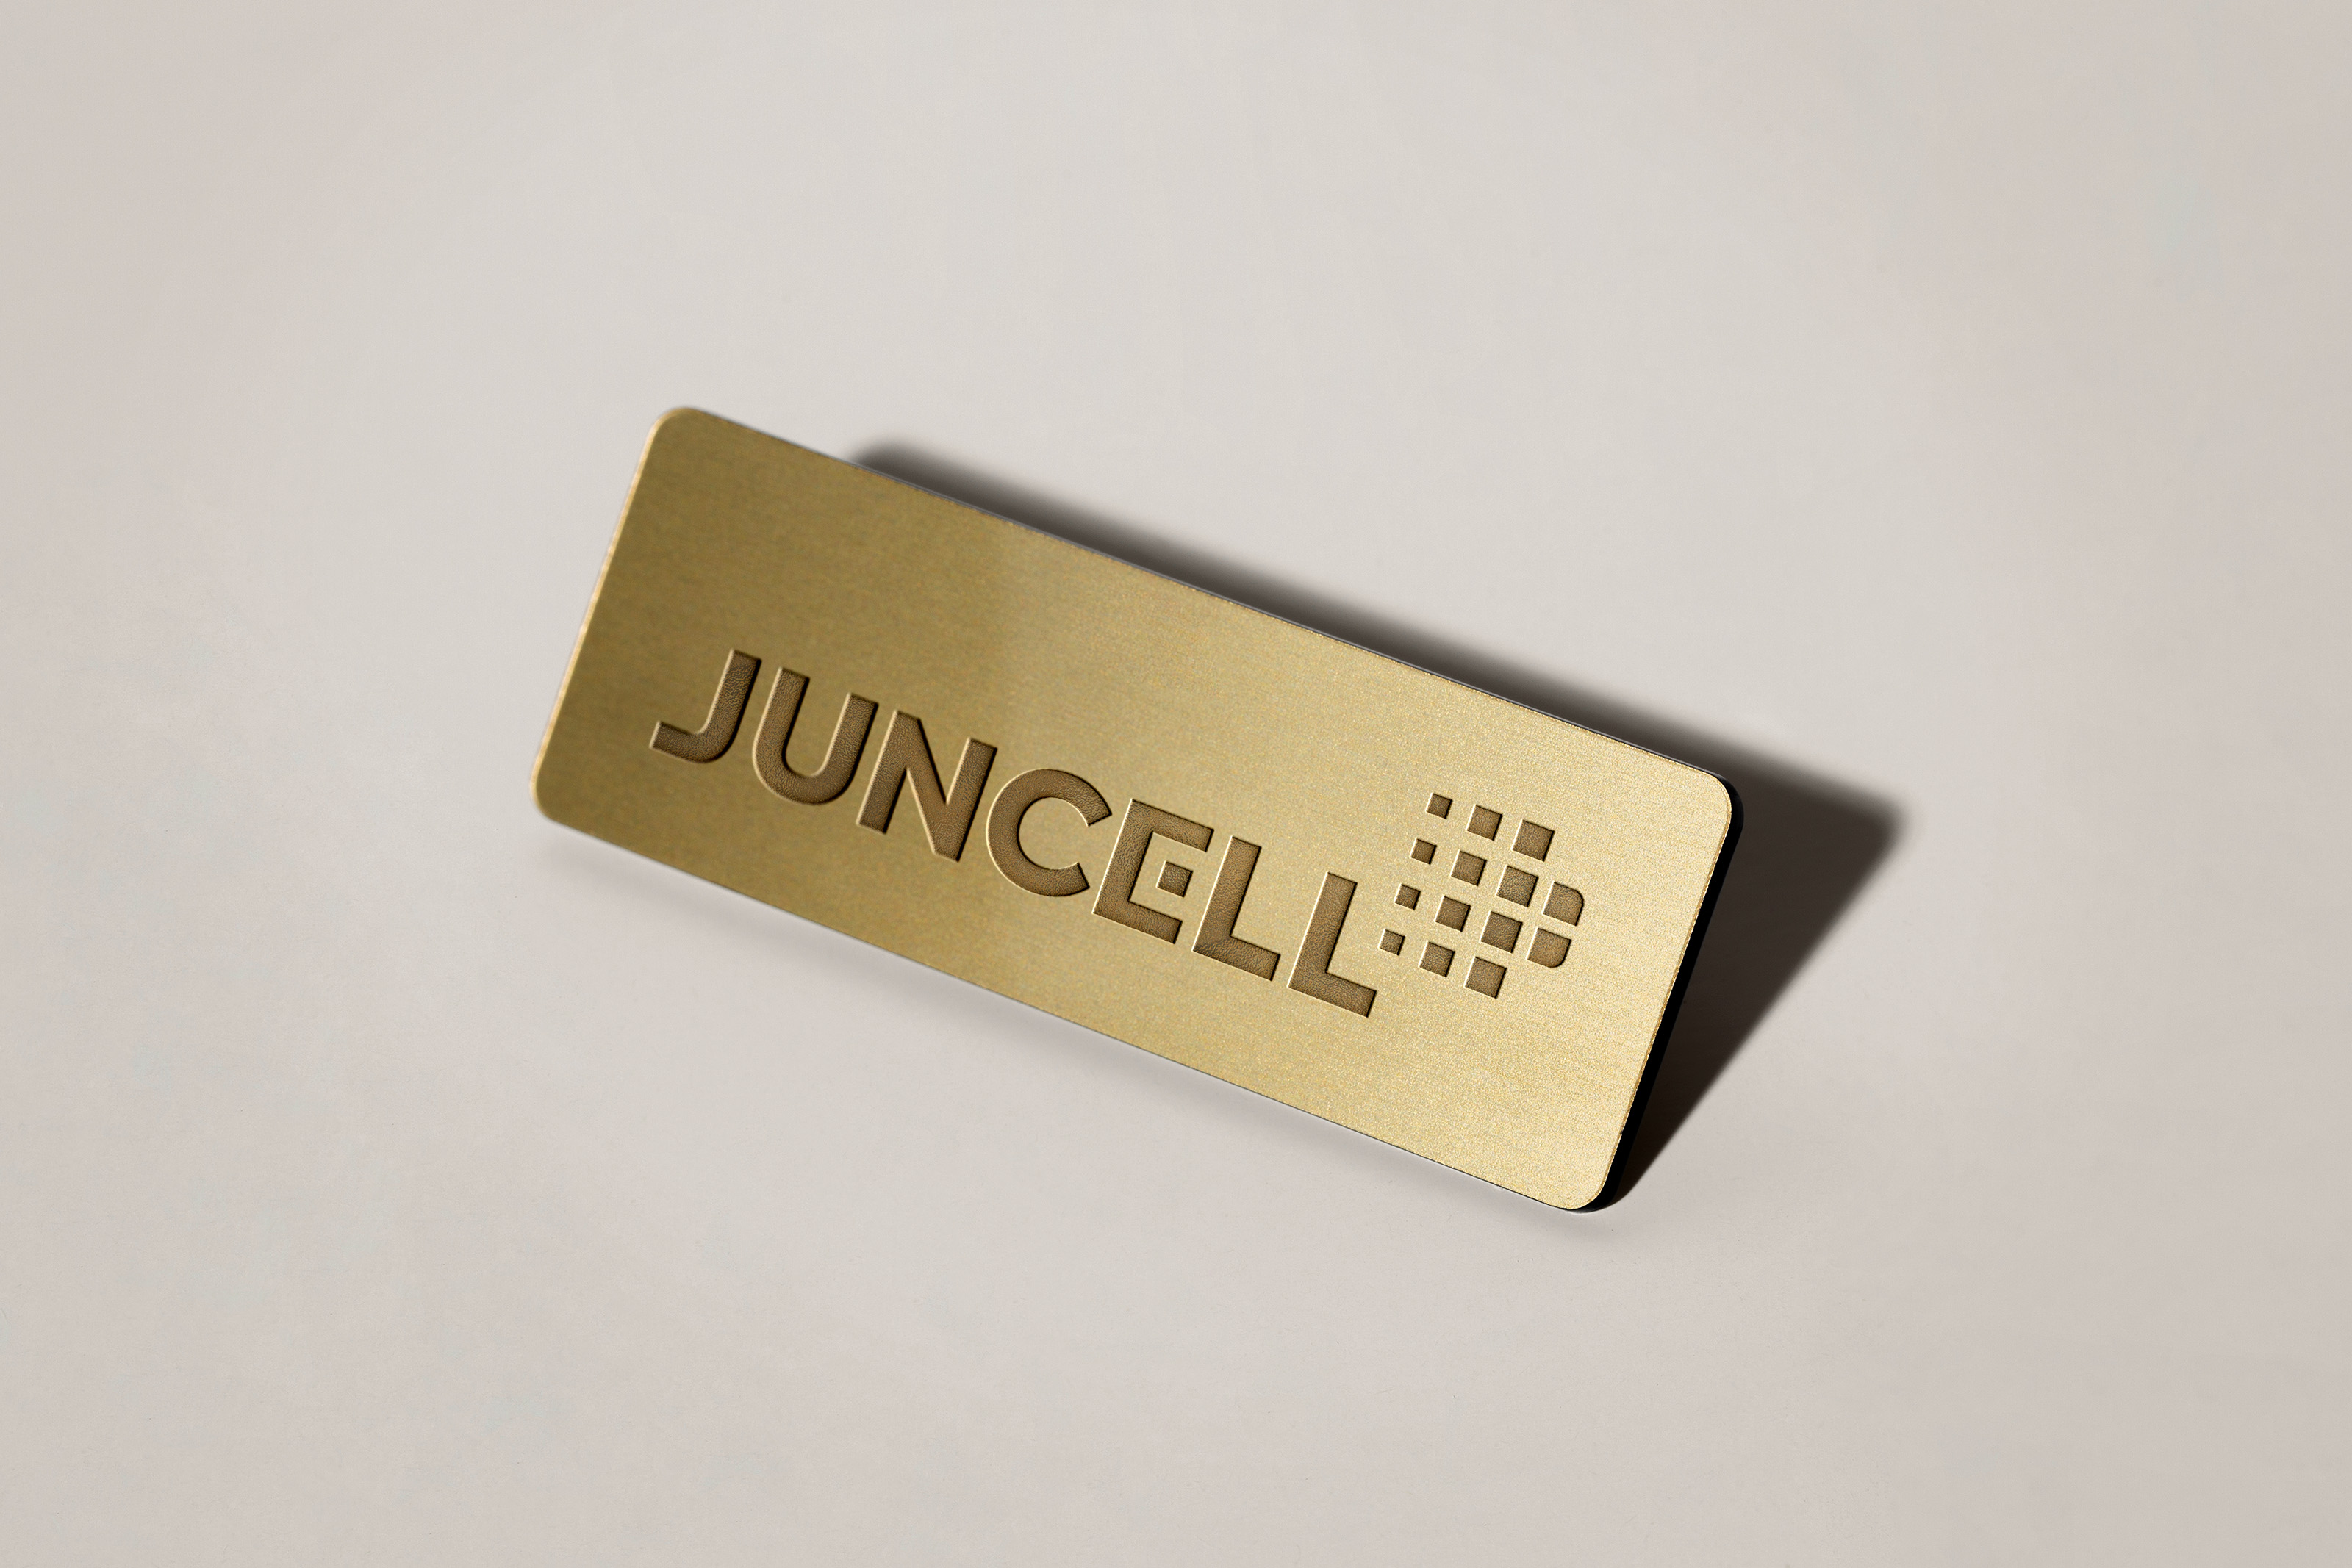 JunCell - (주)매그나텍